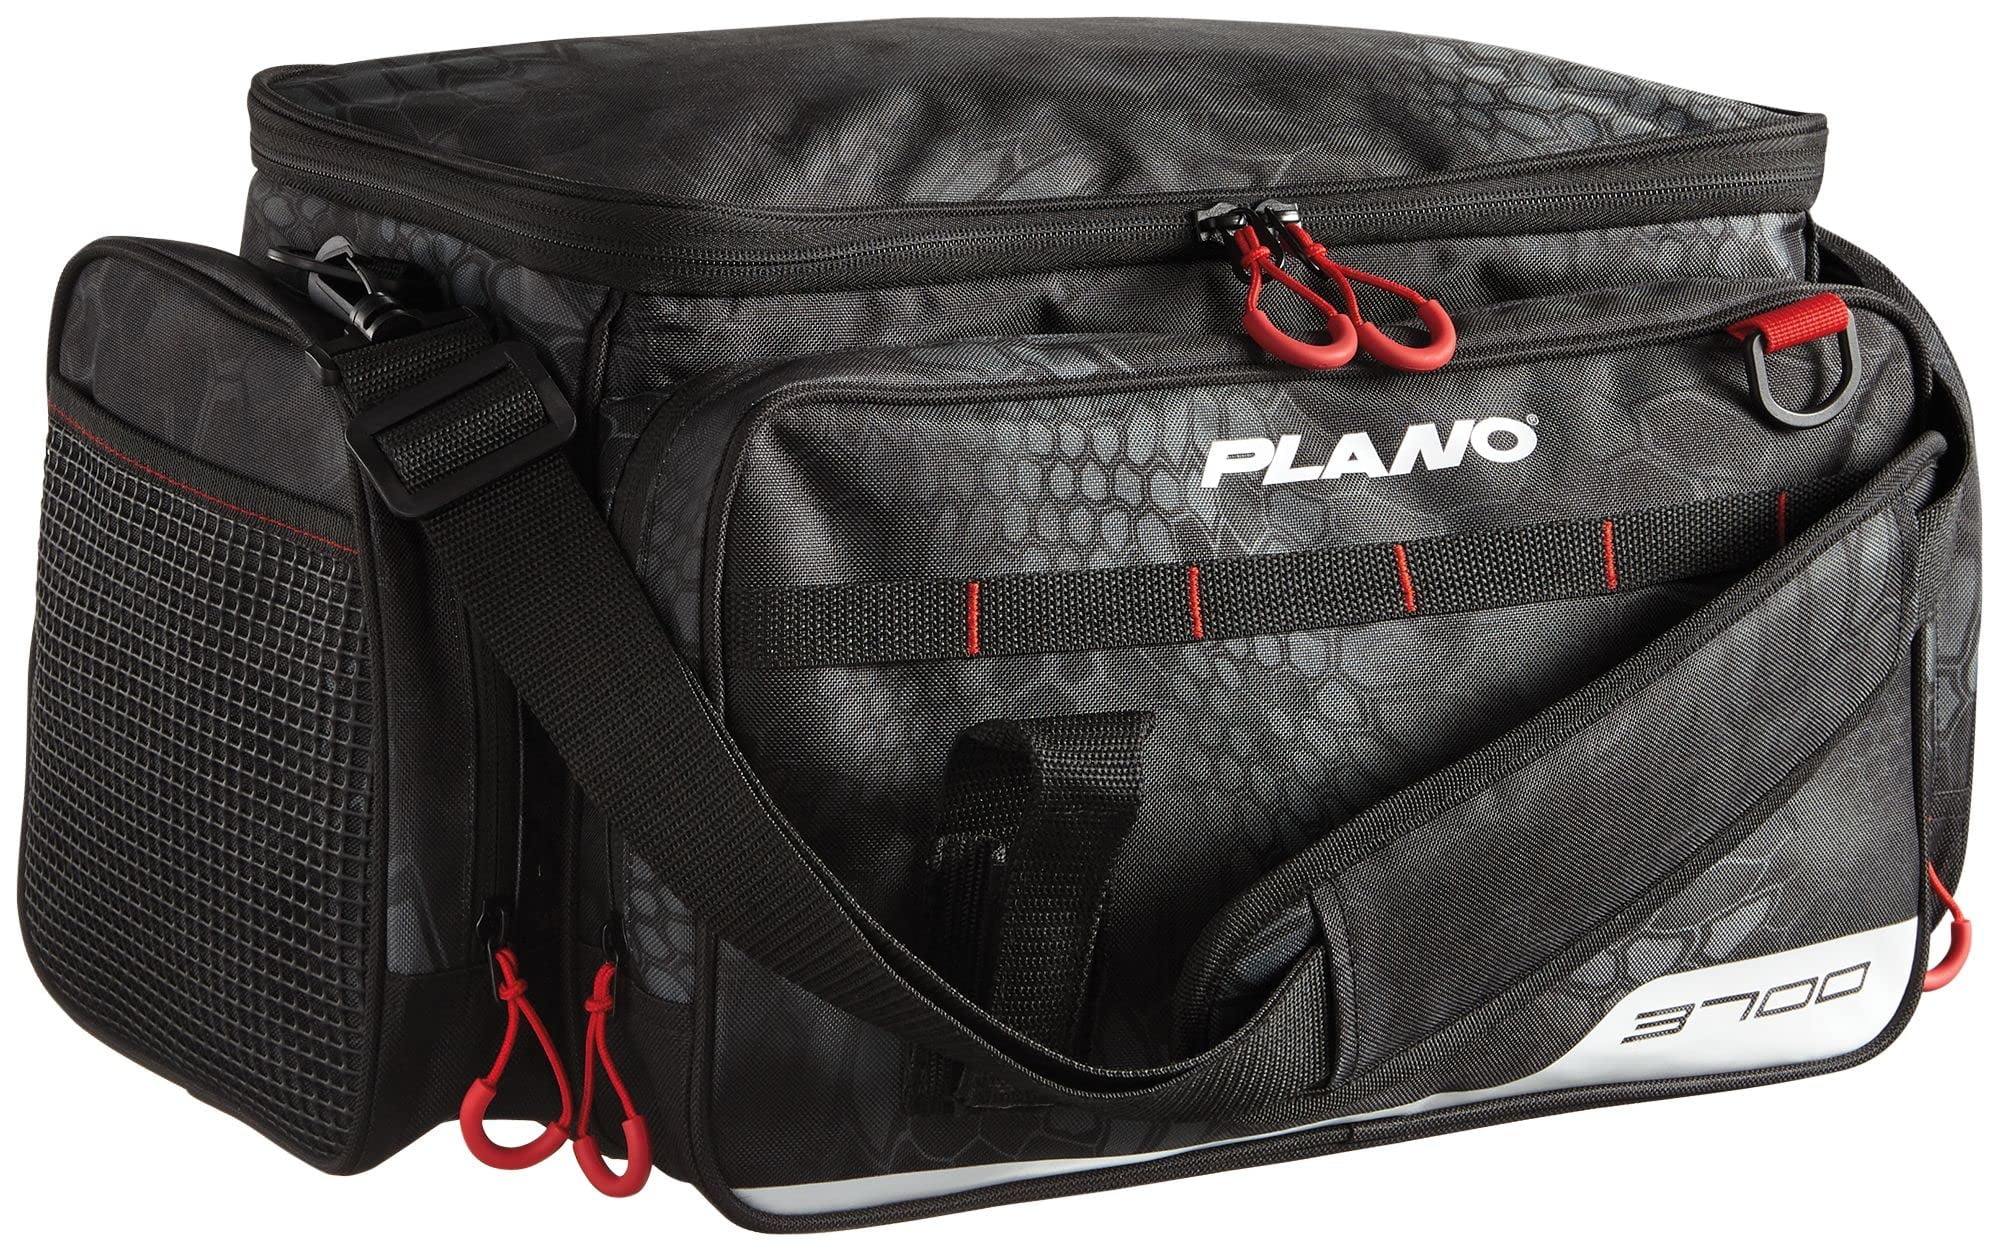 Soft sider Plano 3700 Size Tackle Bag Box Fishing Gear Storage Organizer  Weekend Series 